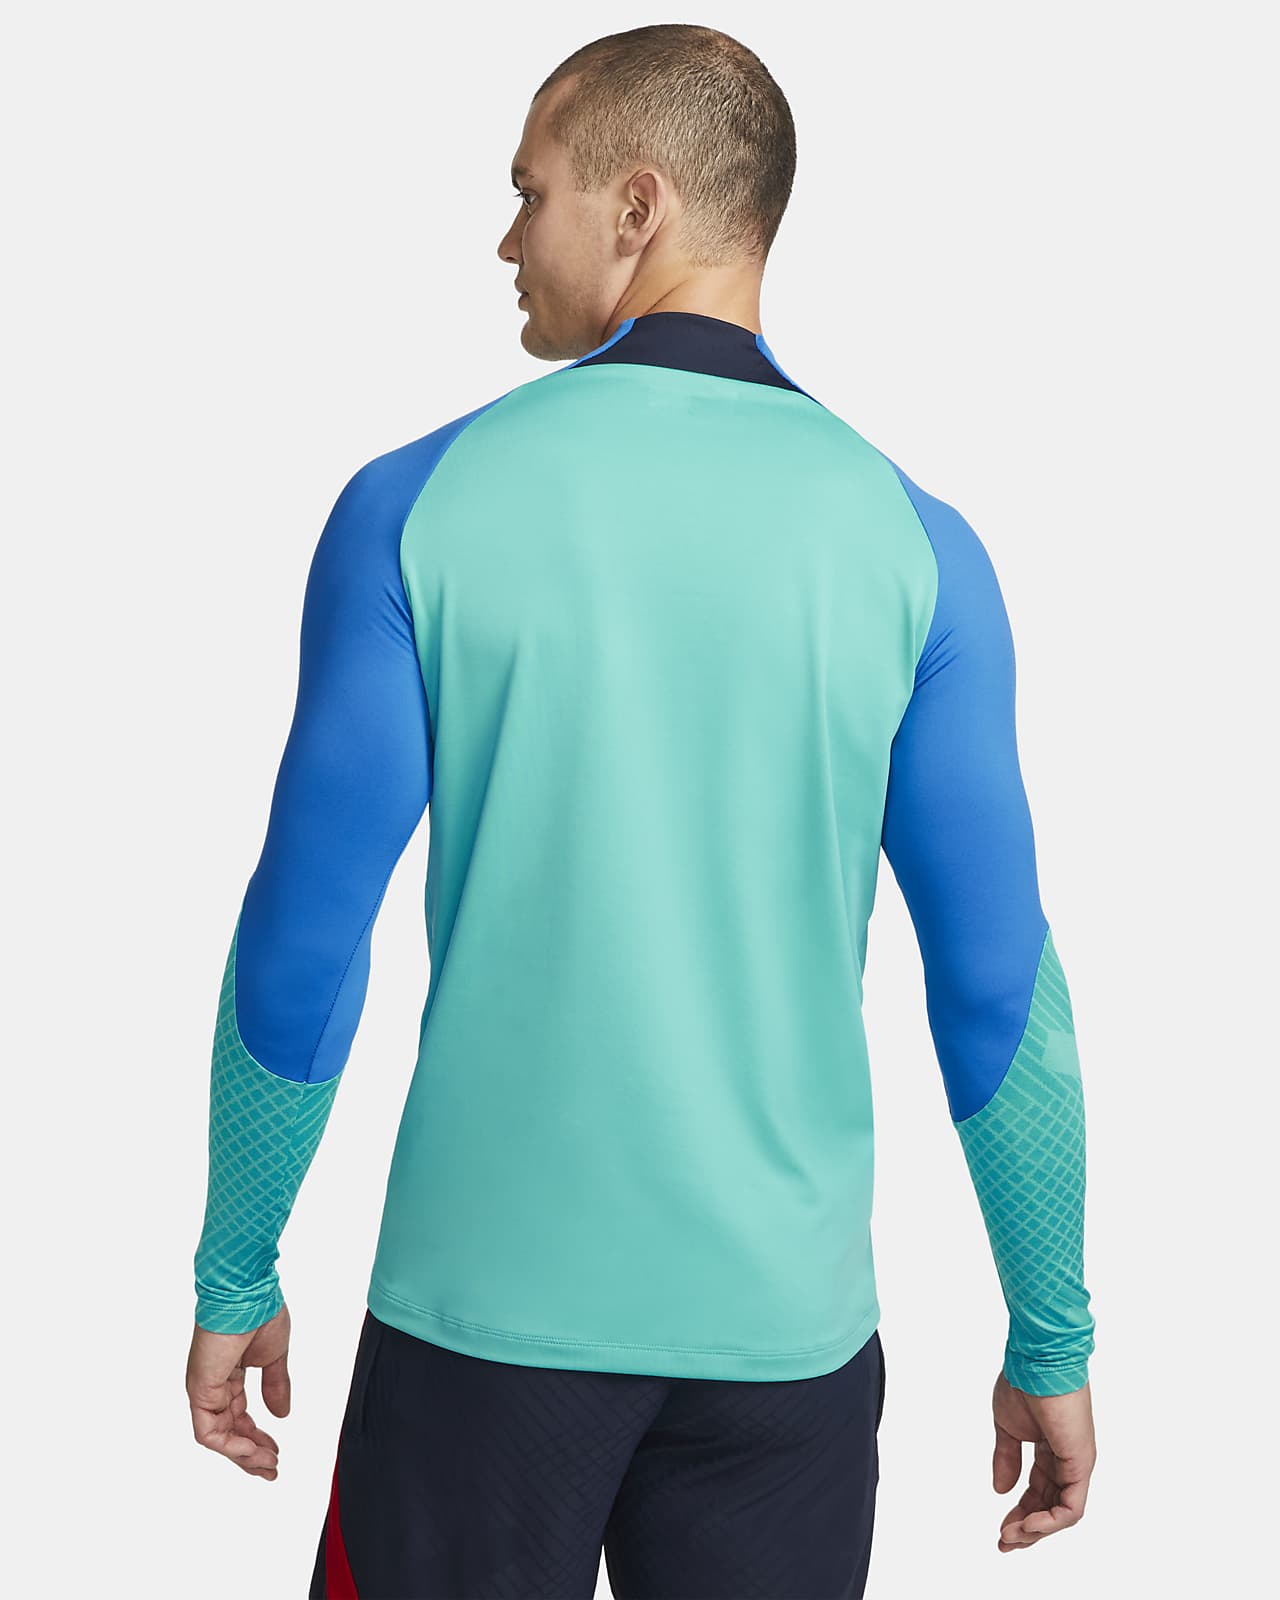 Nike Dri FIT Strike Soccer Drill Top Mens Turquoise, £47.00